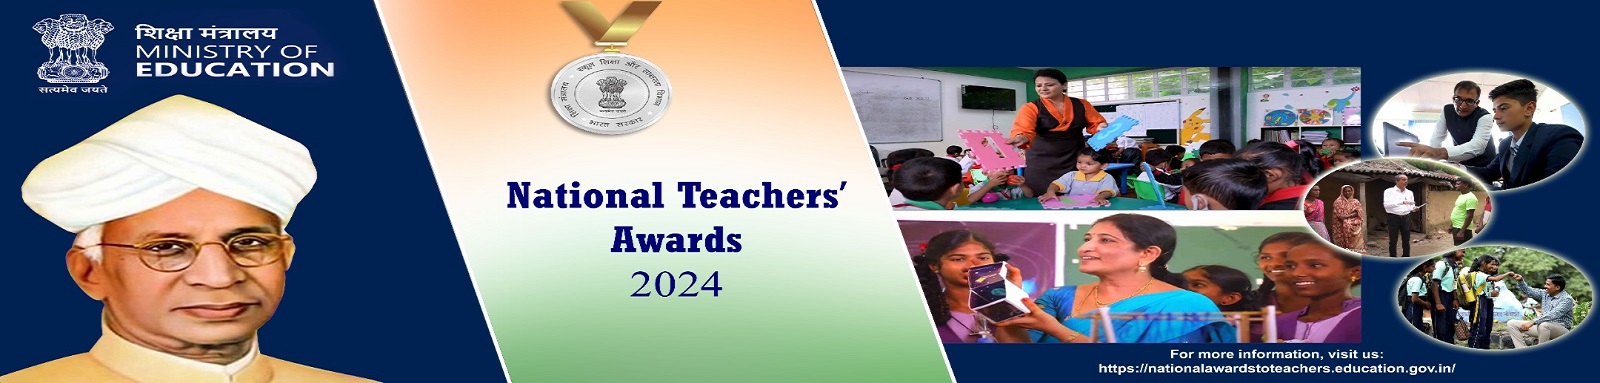 National Teacher Award 2024